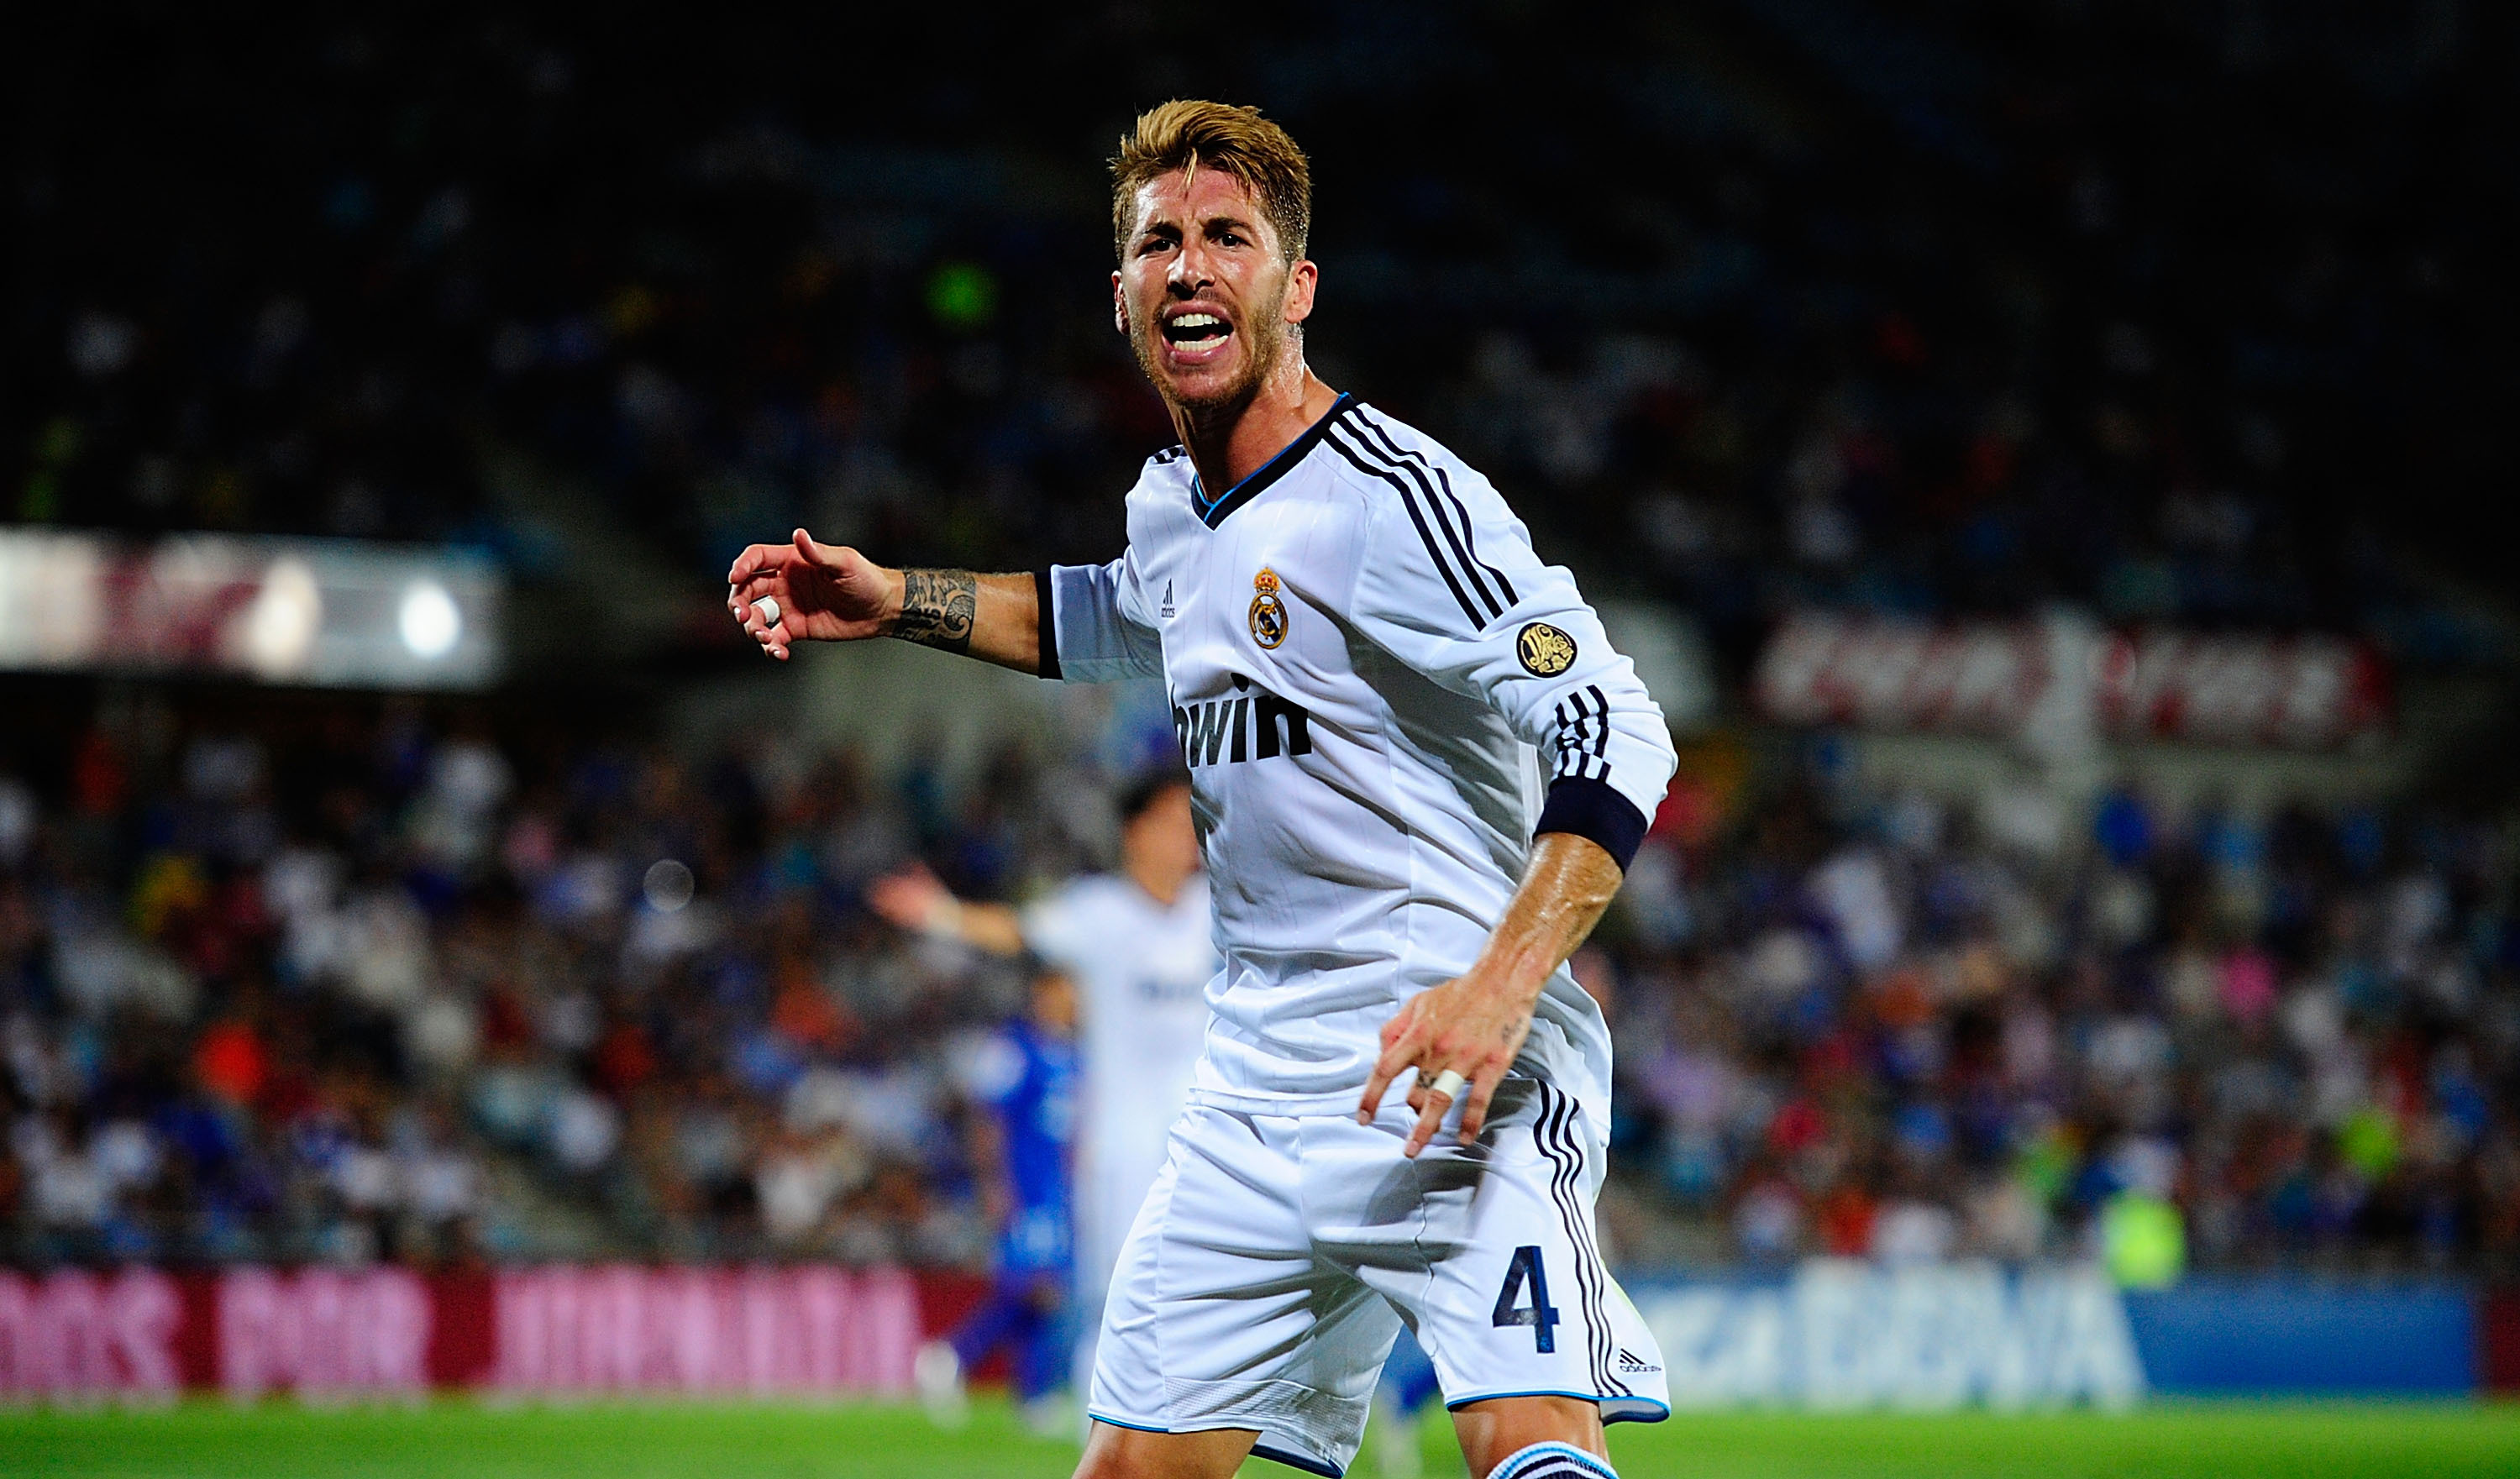 Real Madrid Sergio Ramos Defender Player Wallpaper Image